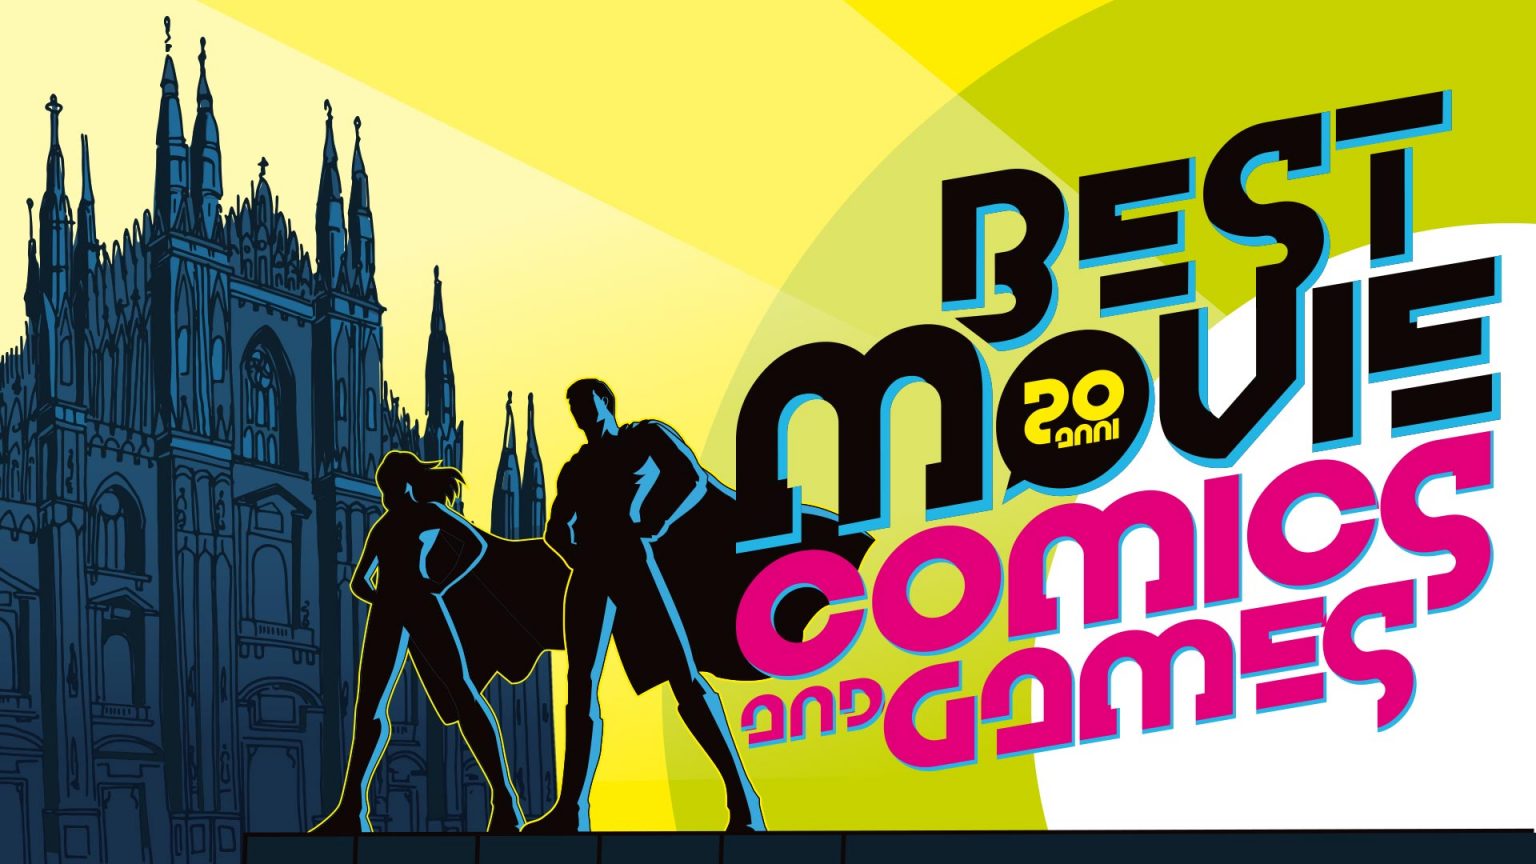 Best Movie Comics & Games